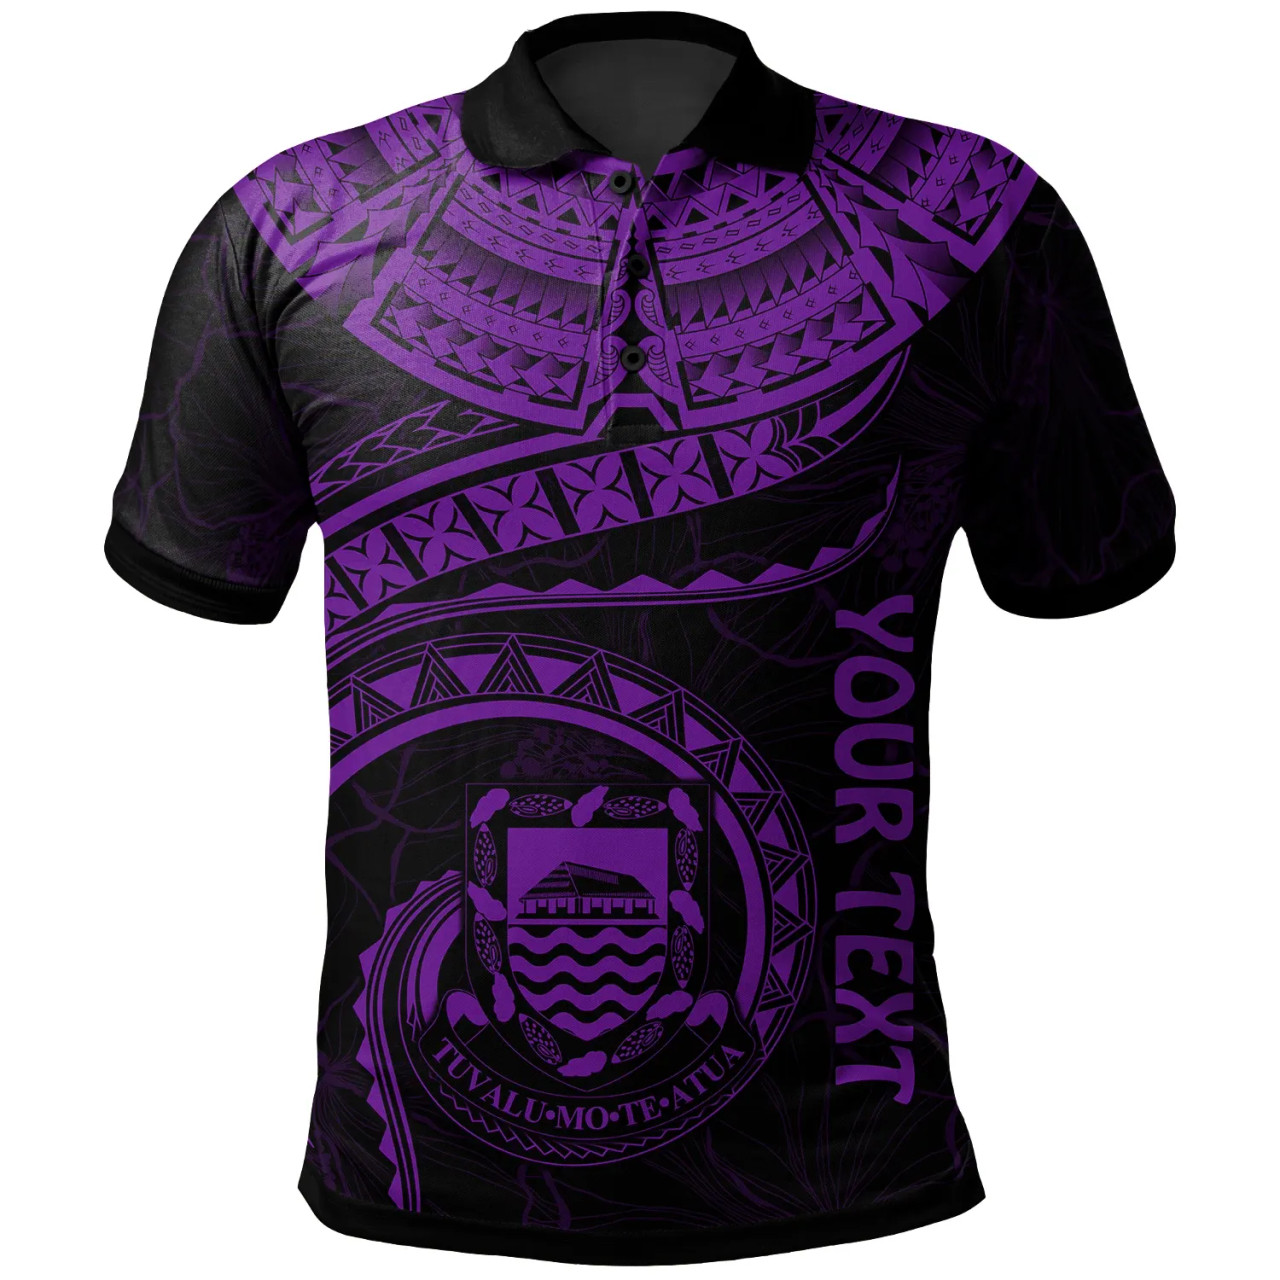 Tuvalu Polynesian Personalised Polo Shirt - Tuvalu Waves (Purple) 1